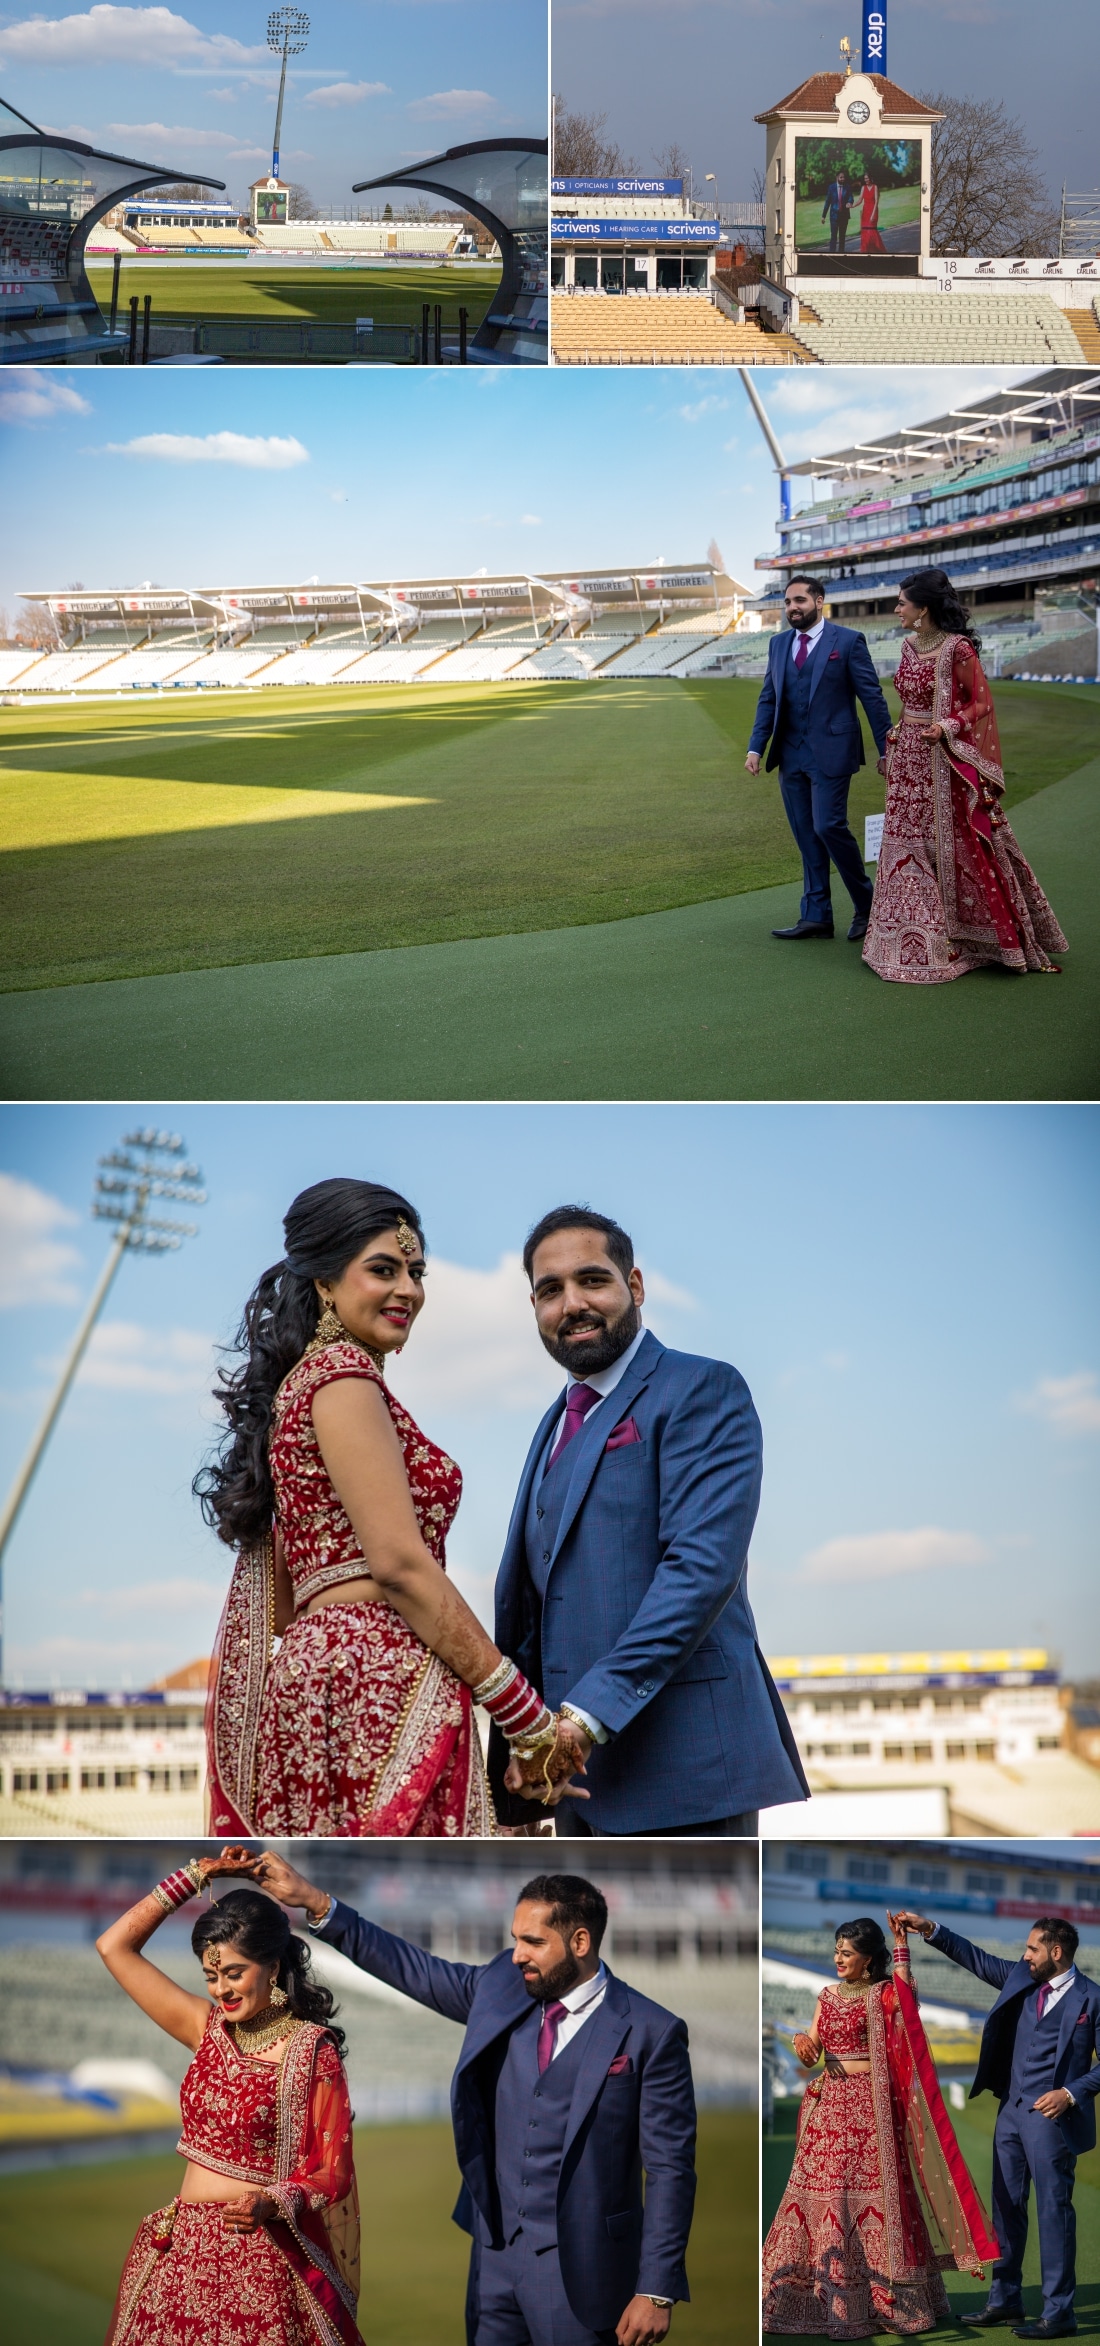 Sikh Wedding at Edgbaston Cricket Ground 22